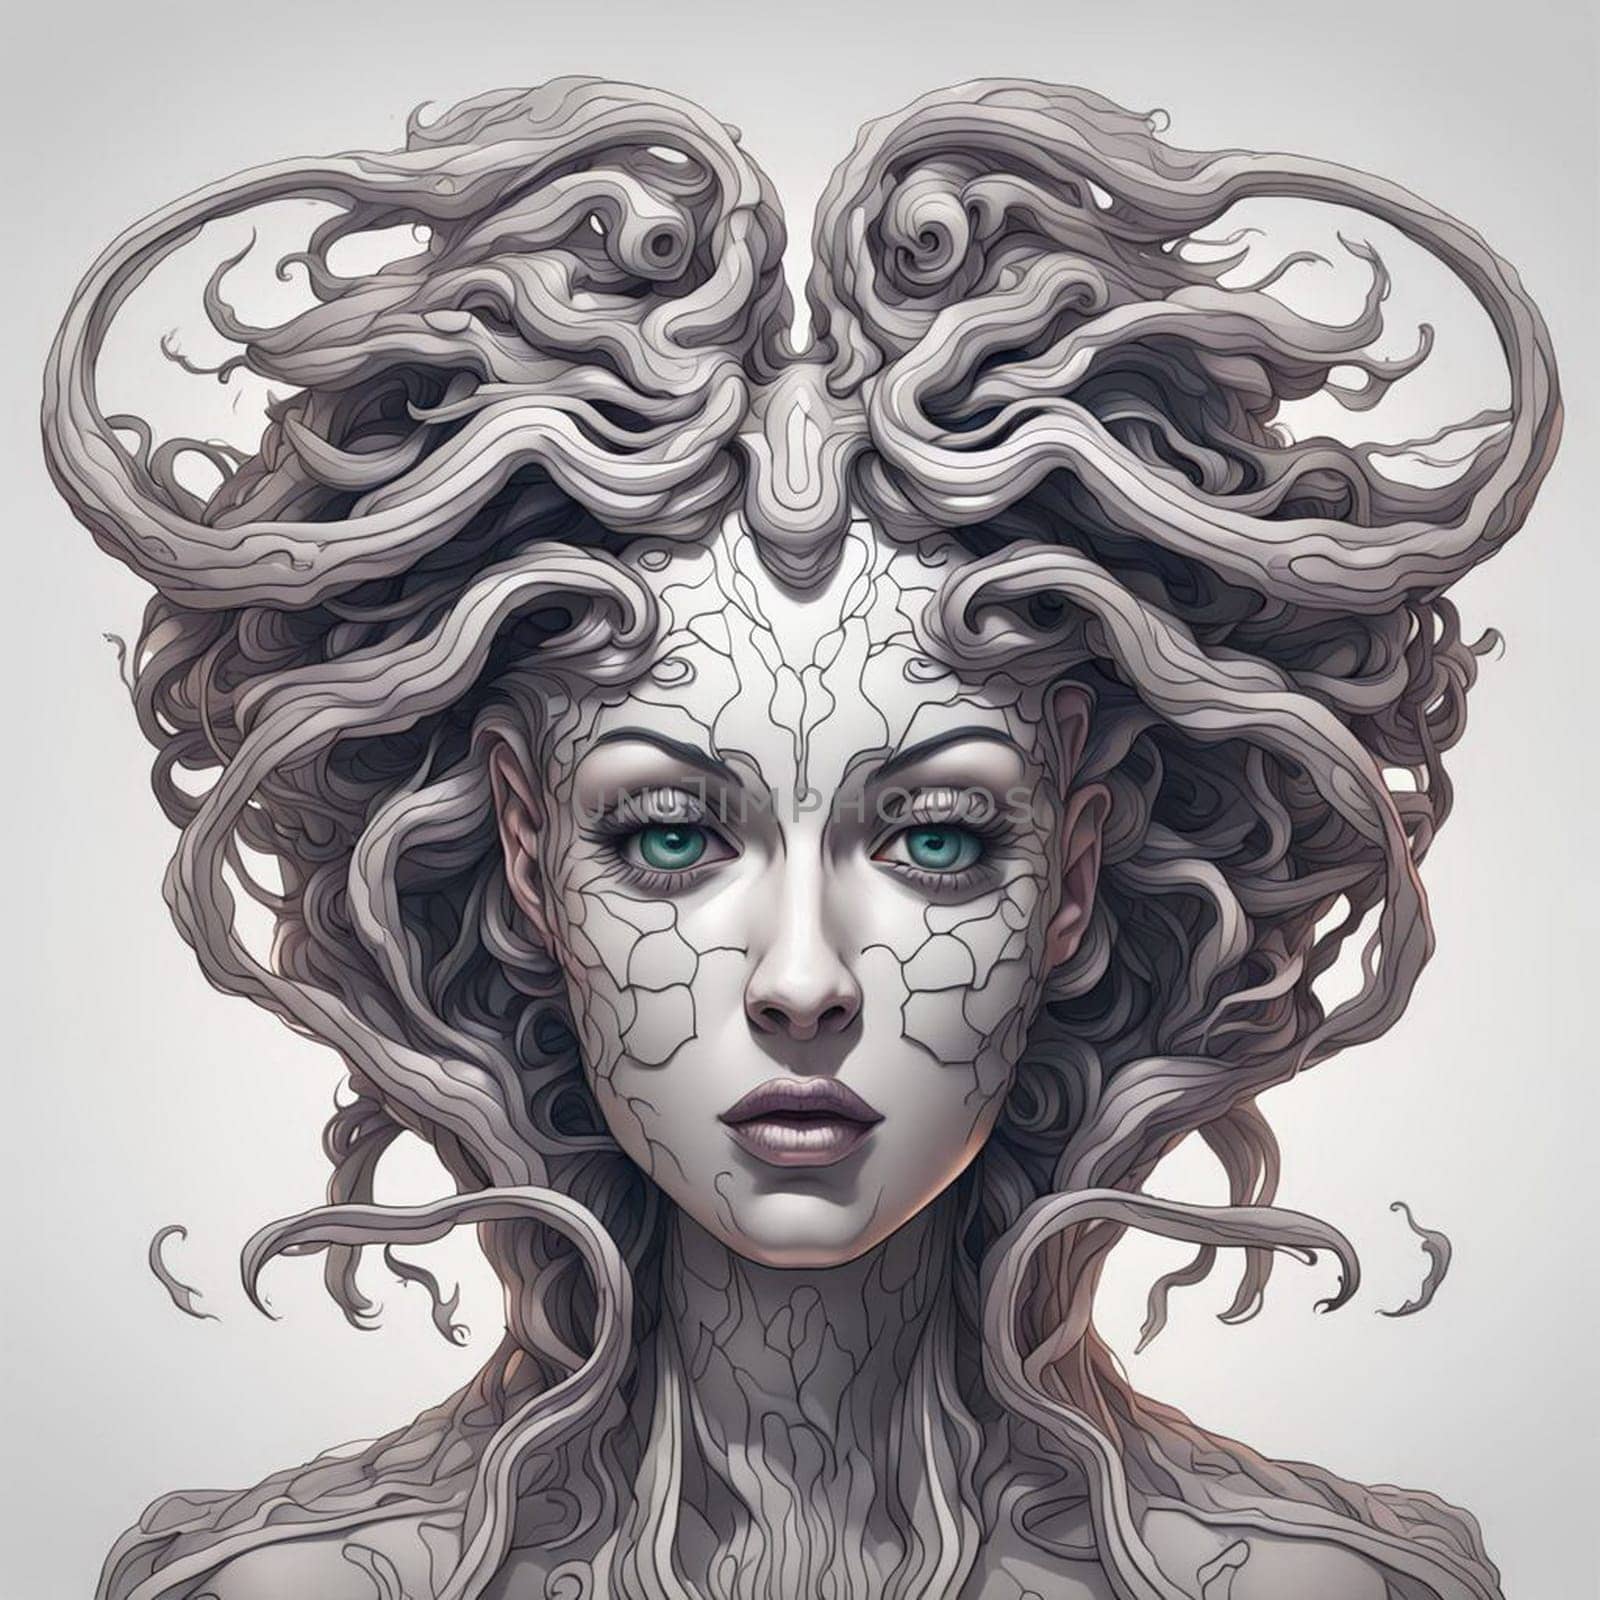 Monochrome portrait of a Medusa. by Vailatese46